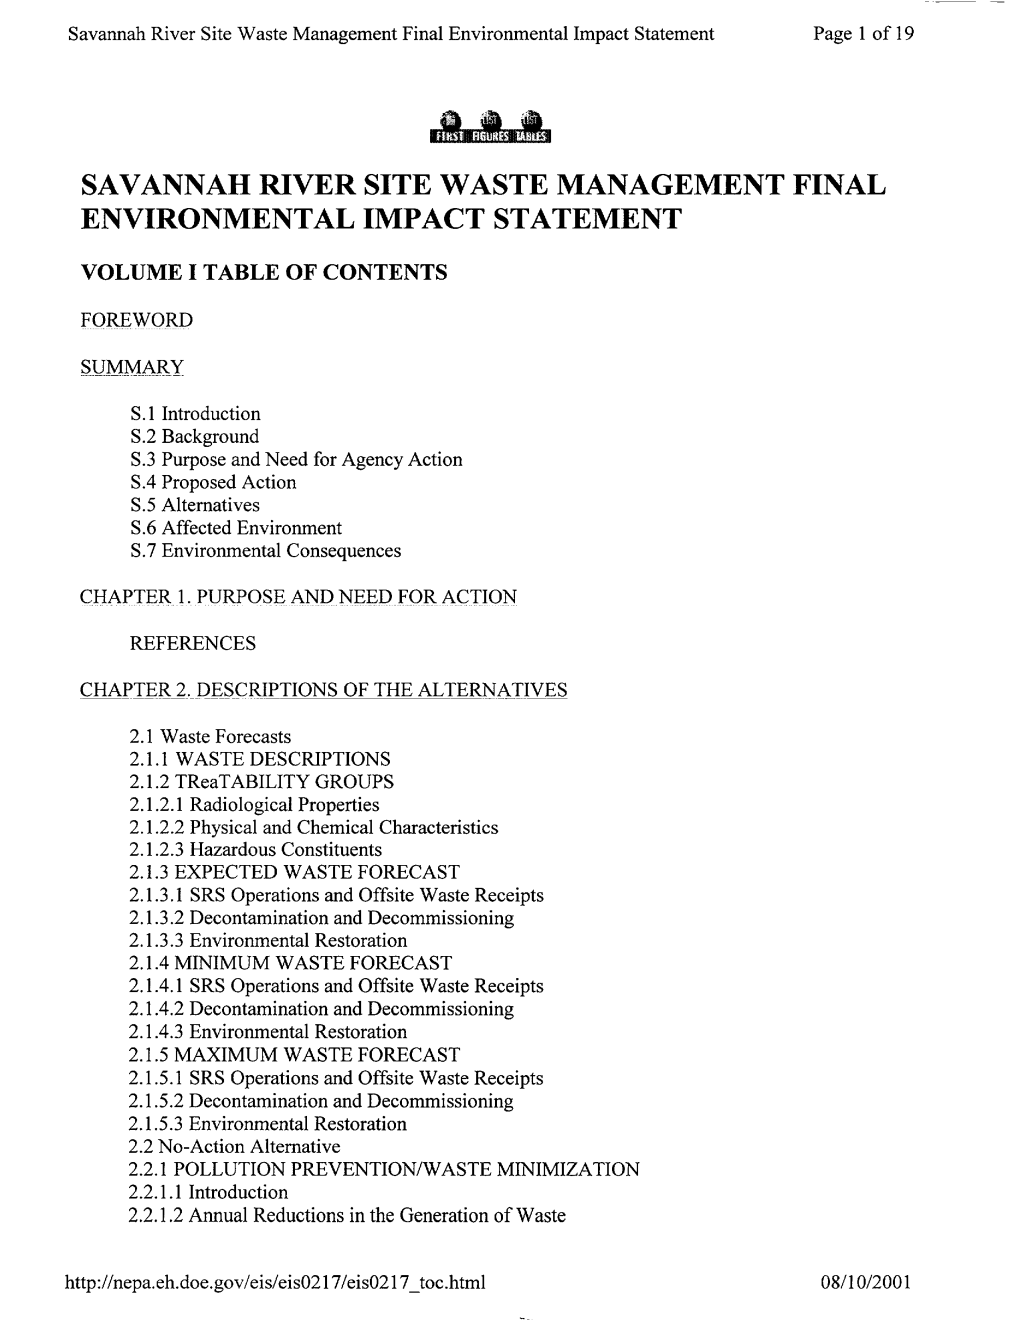 "Savannah River Site Waste Management Final Environmental